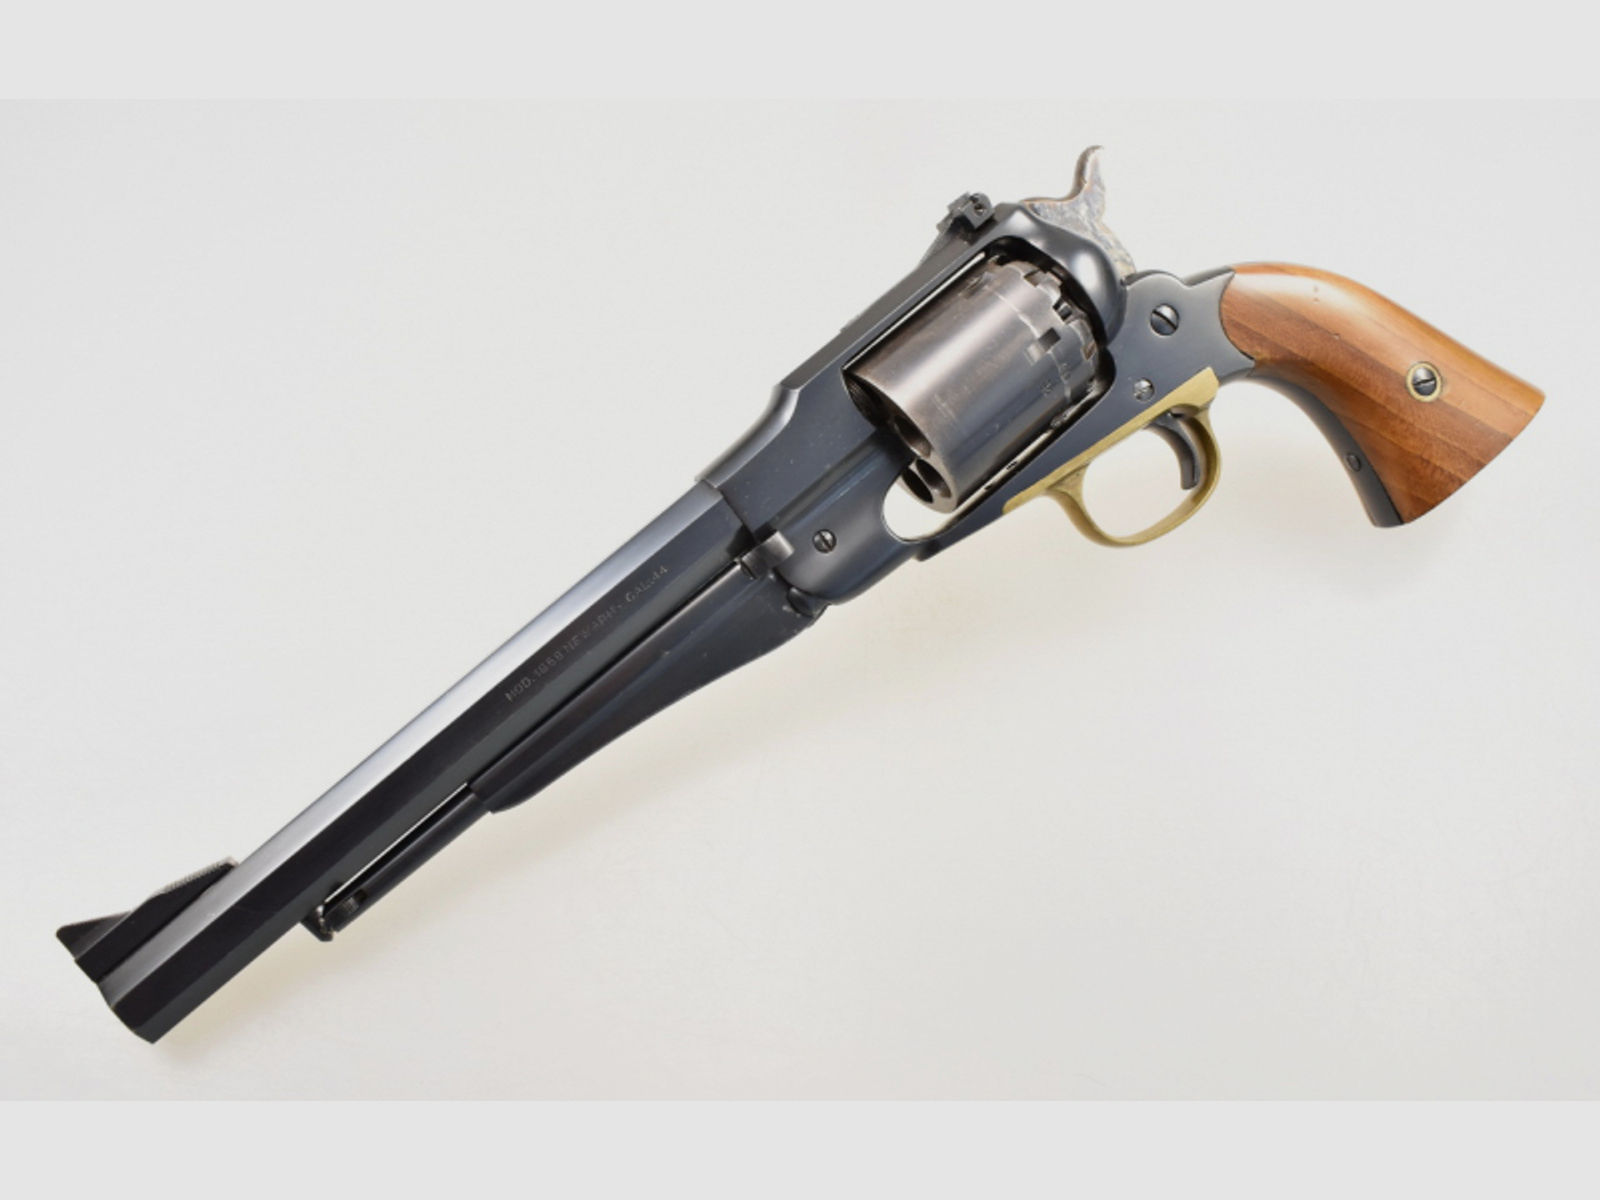 UBERTI Perkussions - Revolver Modell 1858 NEW ARMY im Kaliber .44